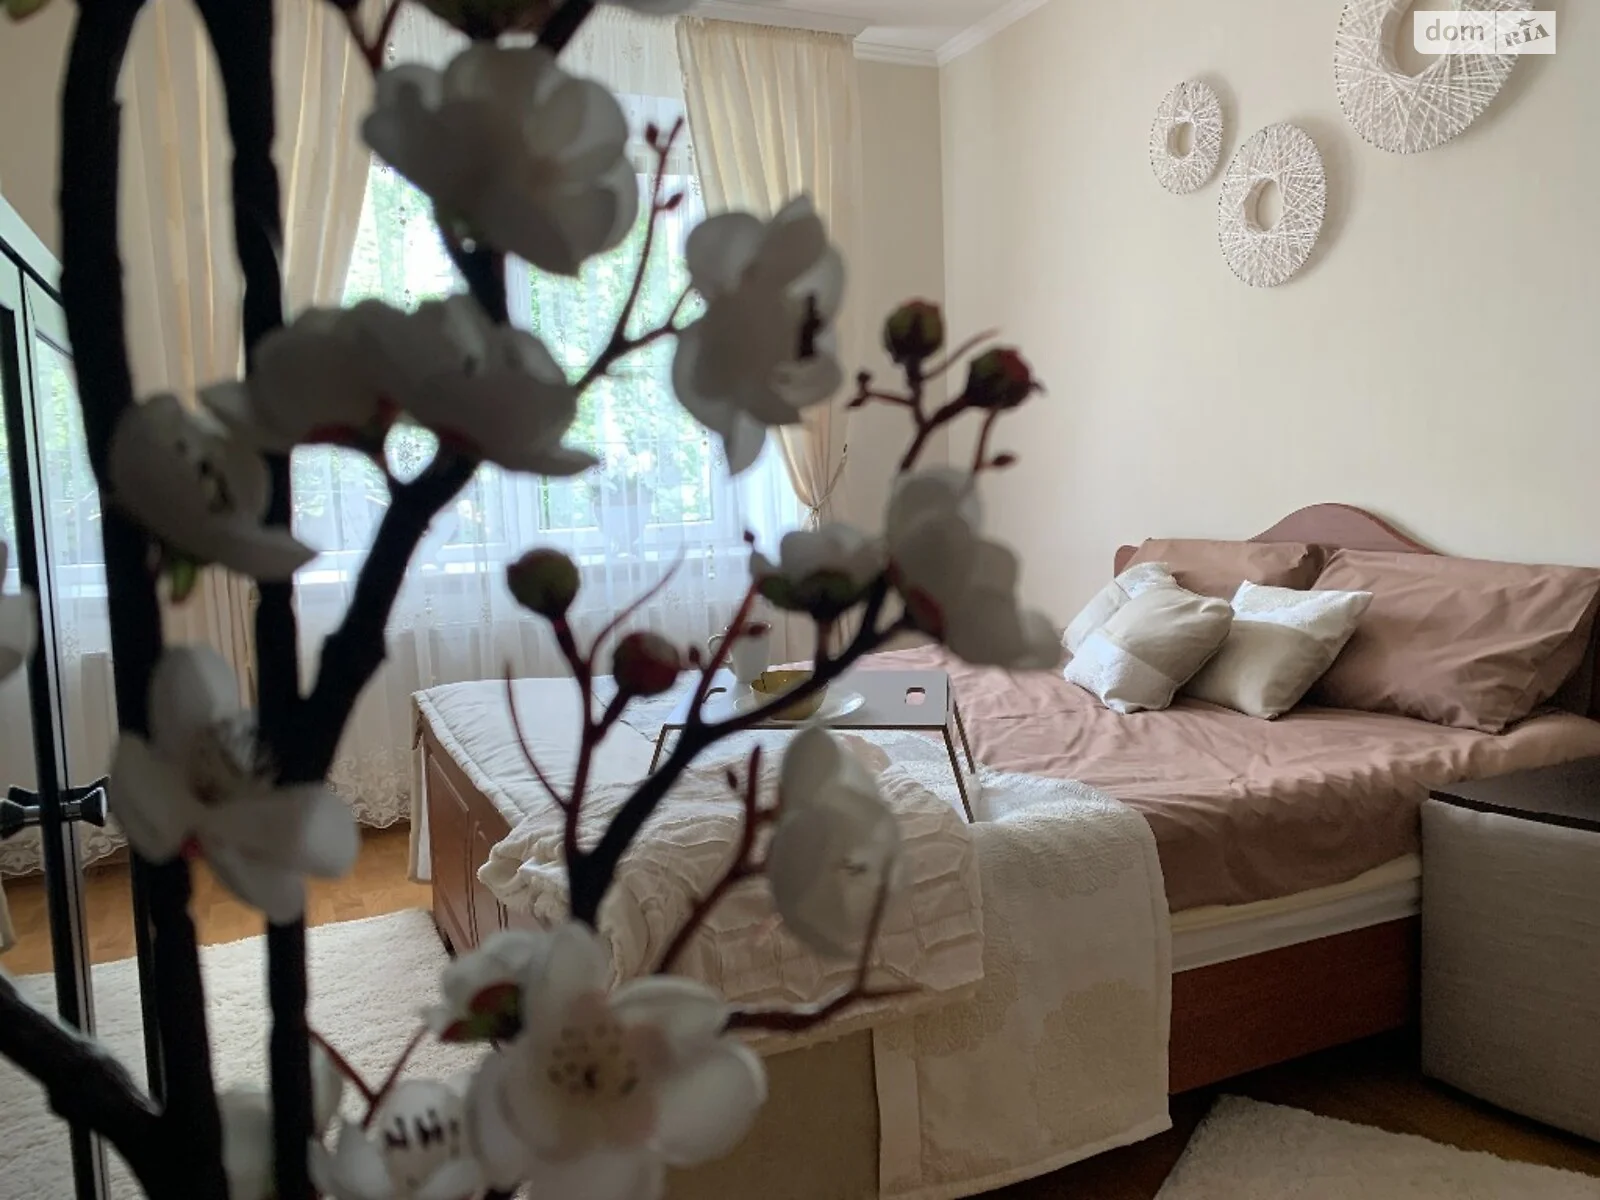 1-кімнатна квартира у Тернополі, цена: 952 грн - фото 1